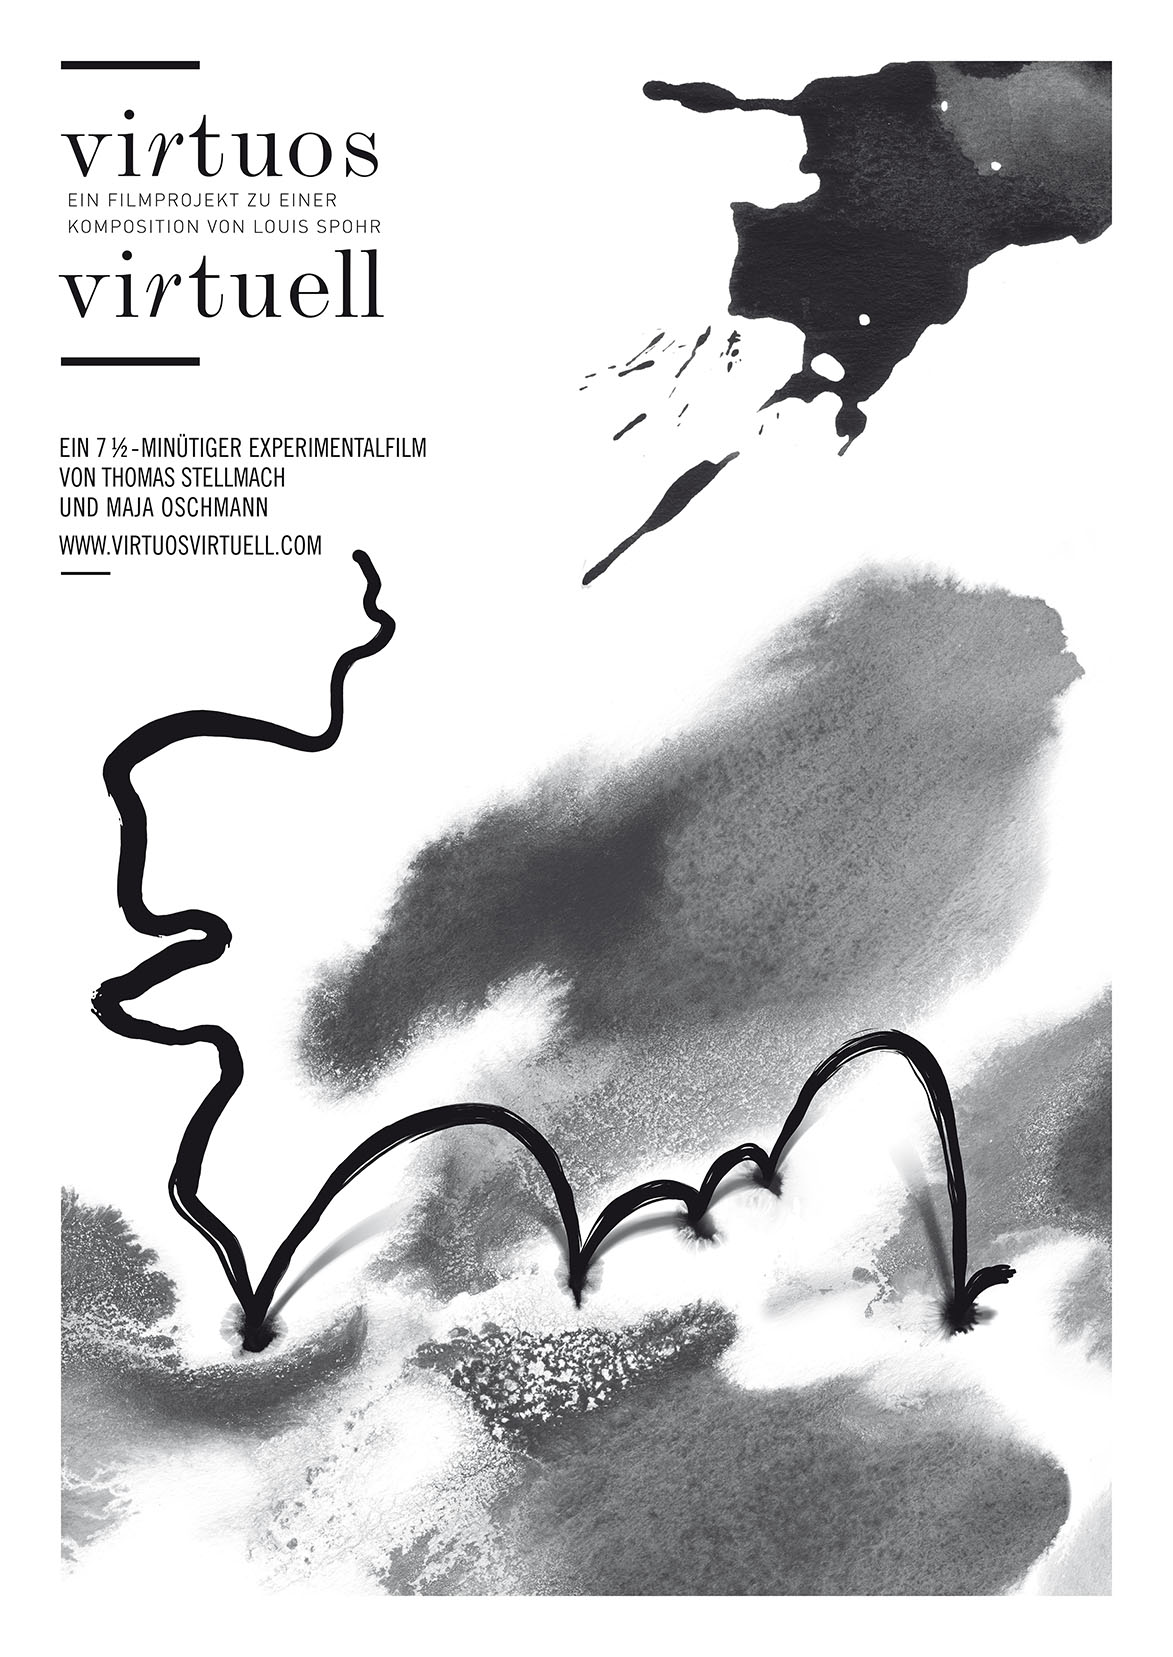 VIRTUOSO VIRTUAL, film poster